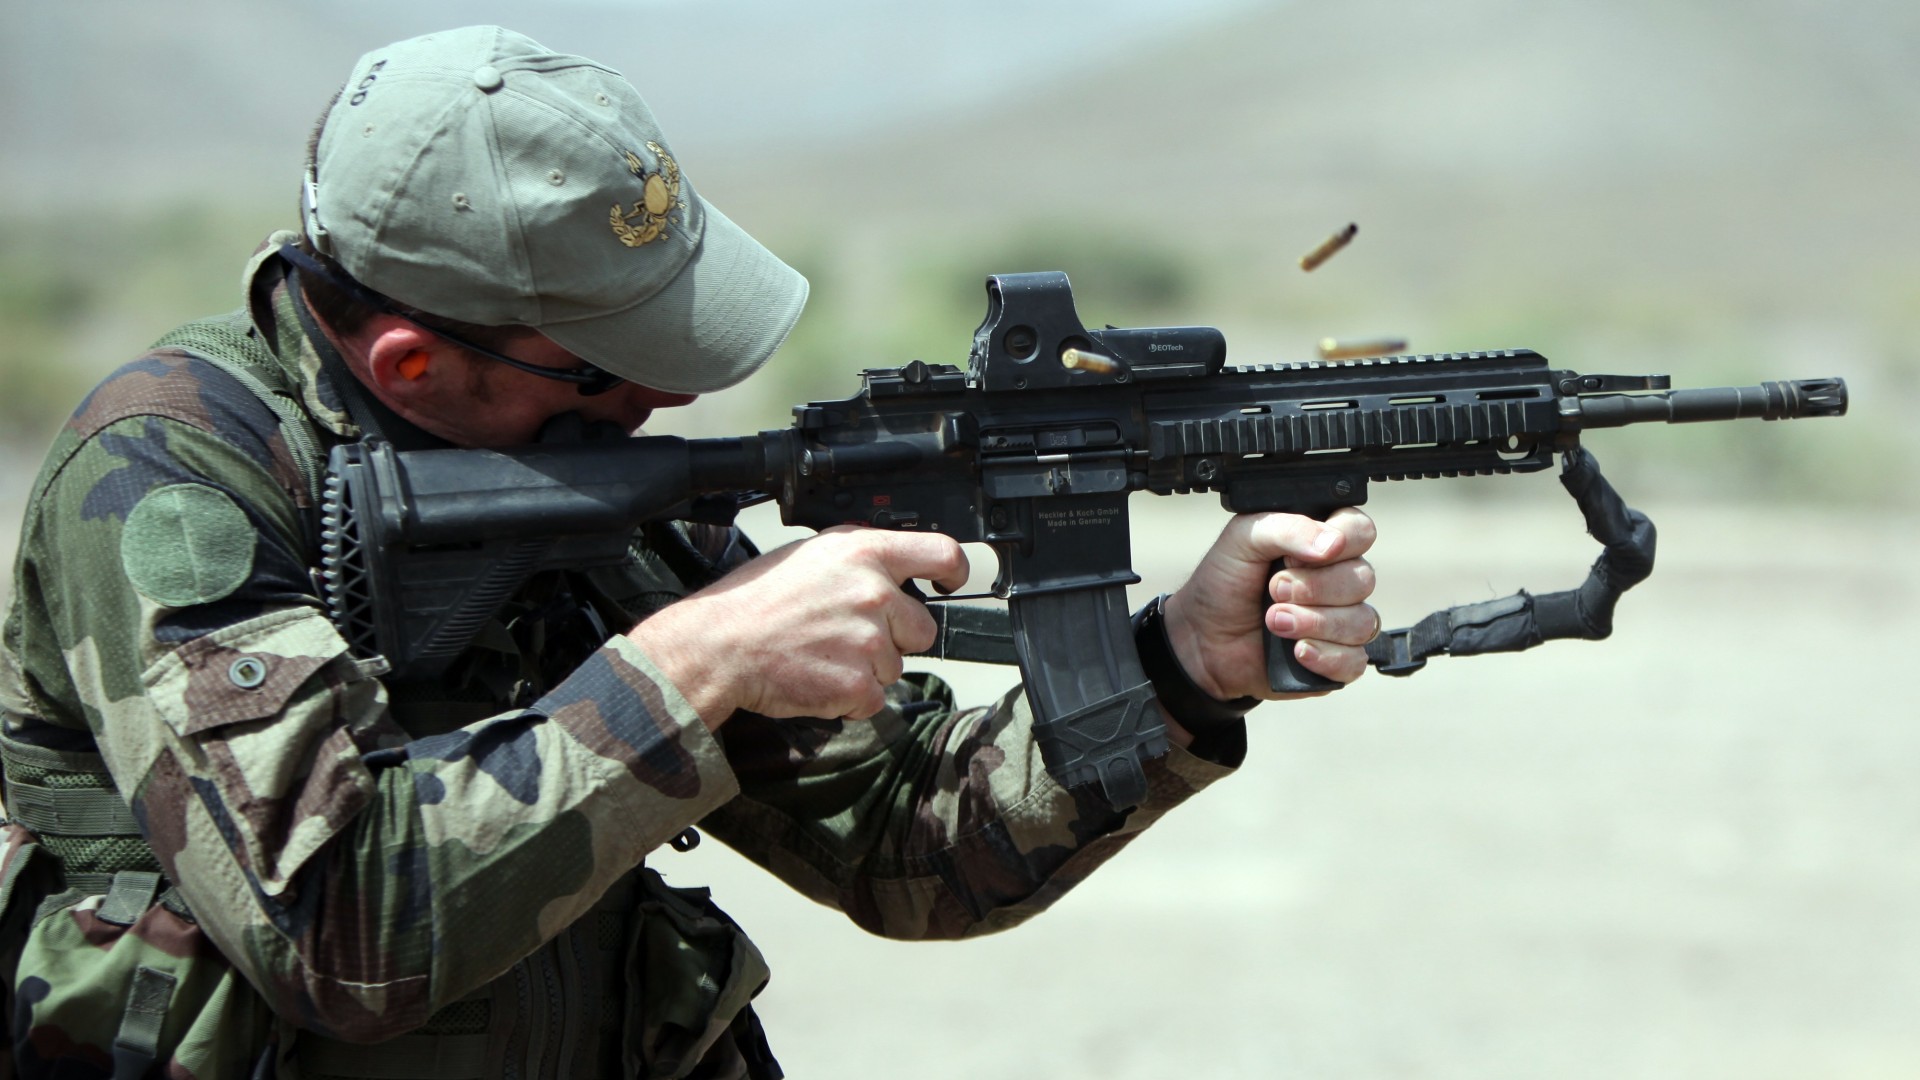 автомат, солдат, стрельба, HK416, soldier, Heckler & Koch, assault rifle, firing, camo, in action (horizontal)